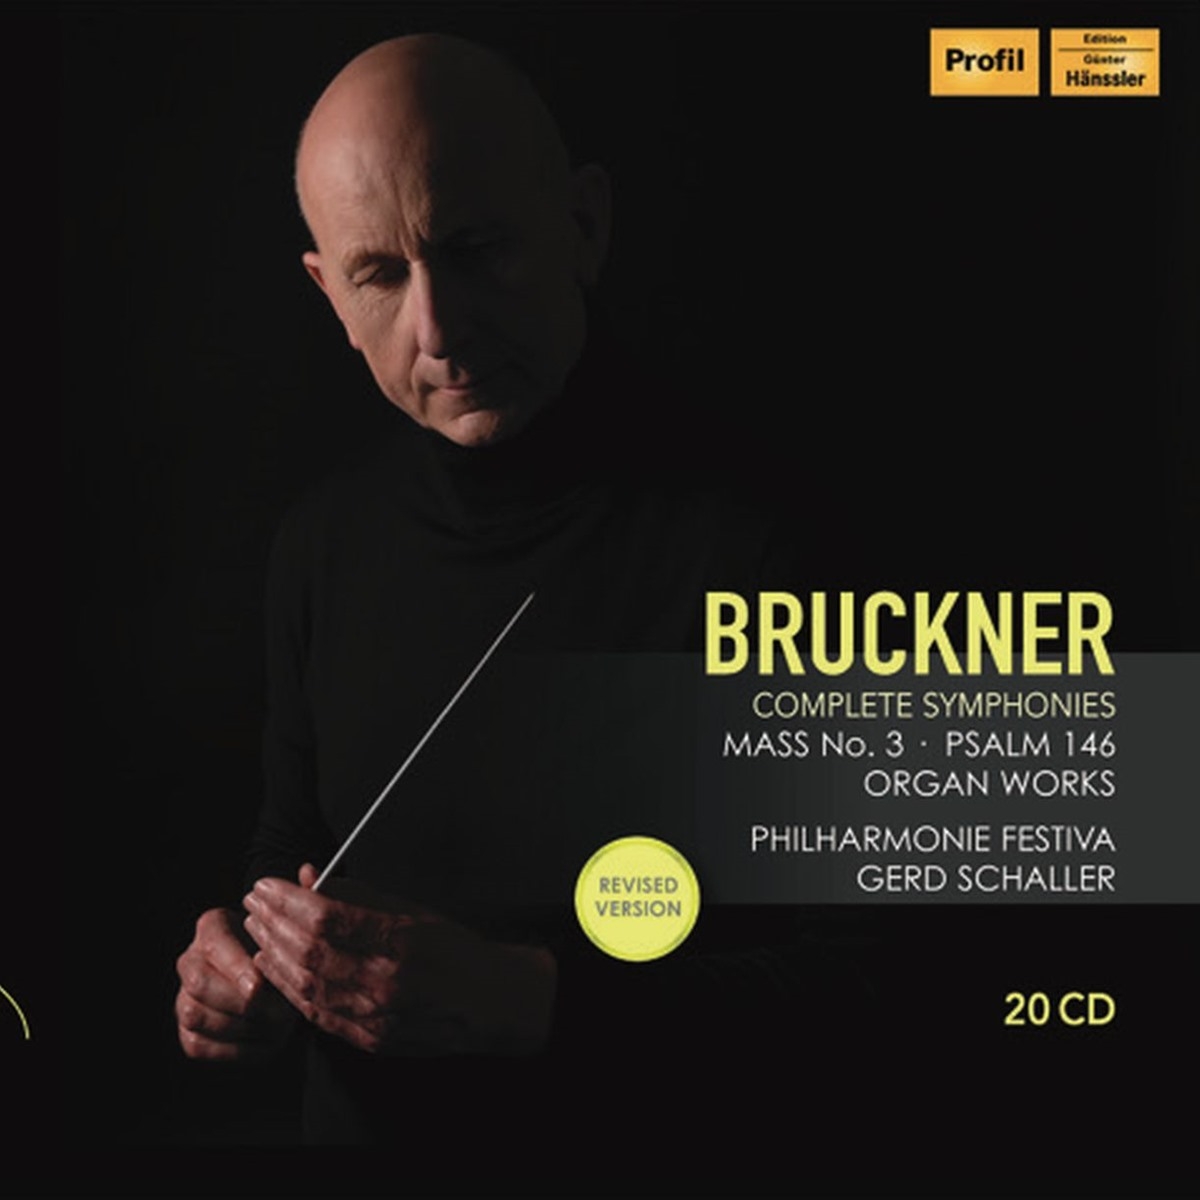 Bruckner Complete Symphonies